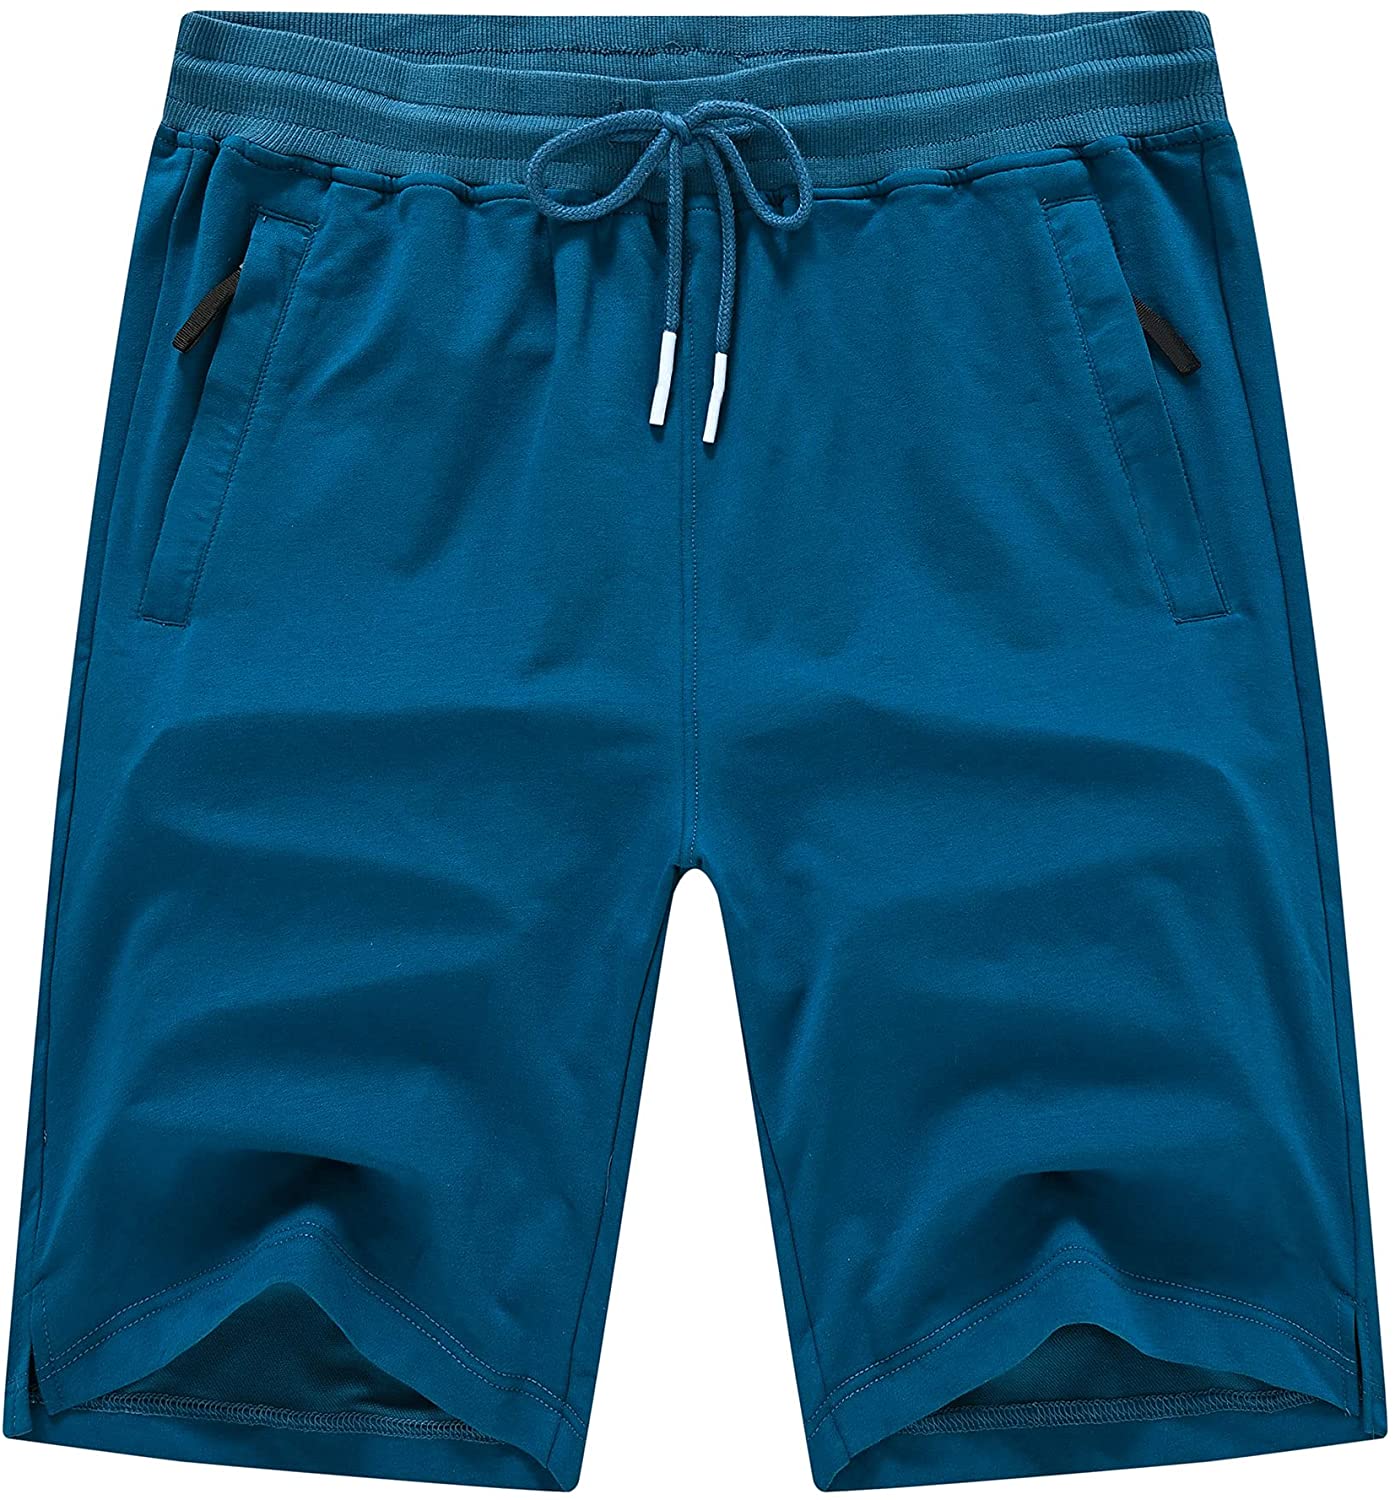 YuKaiChen Men's Shorts Casual Drawstring Classic Fit Gym Workout Shorts with Zipper Pockets 